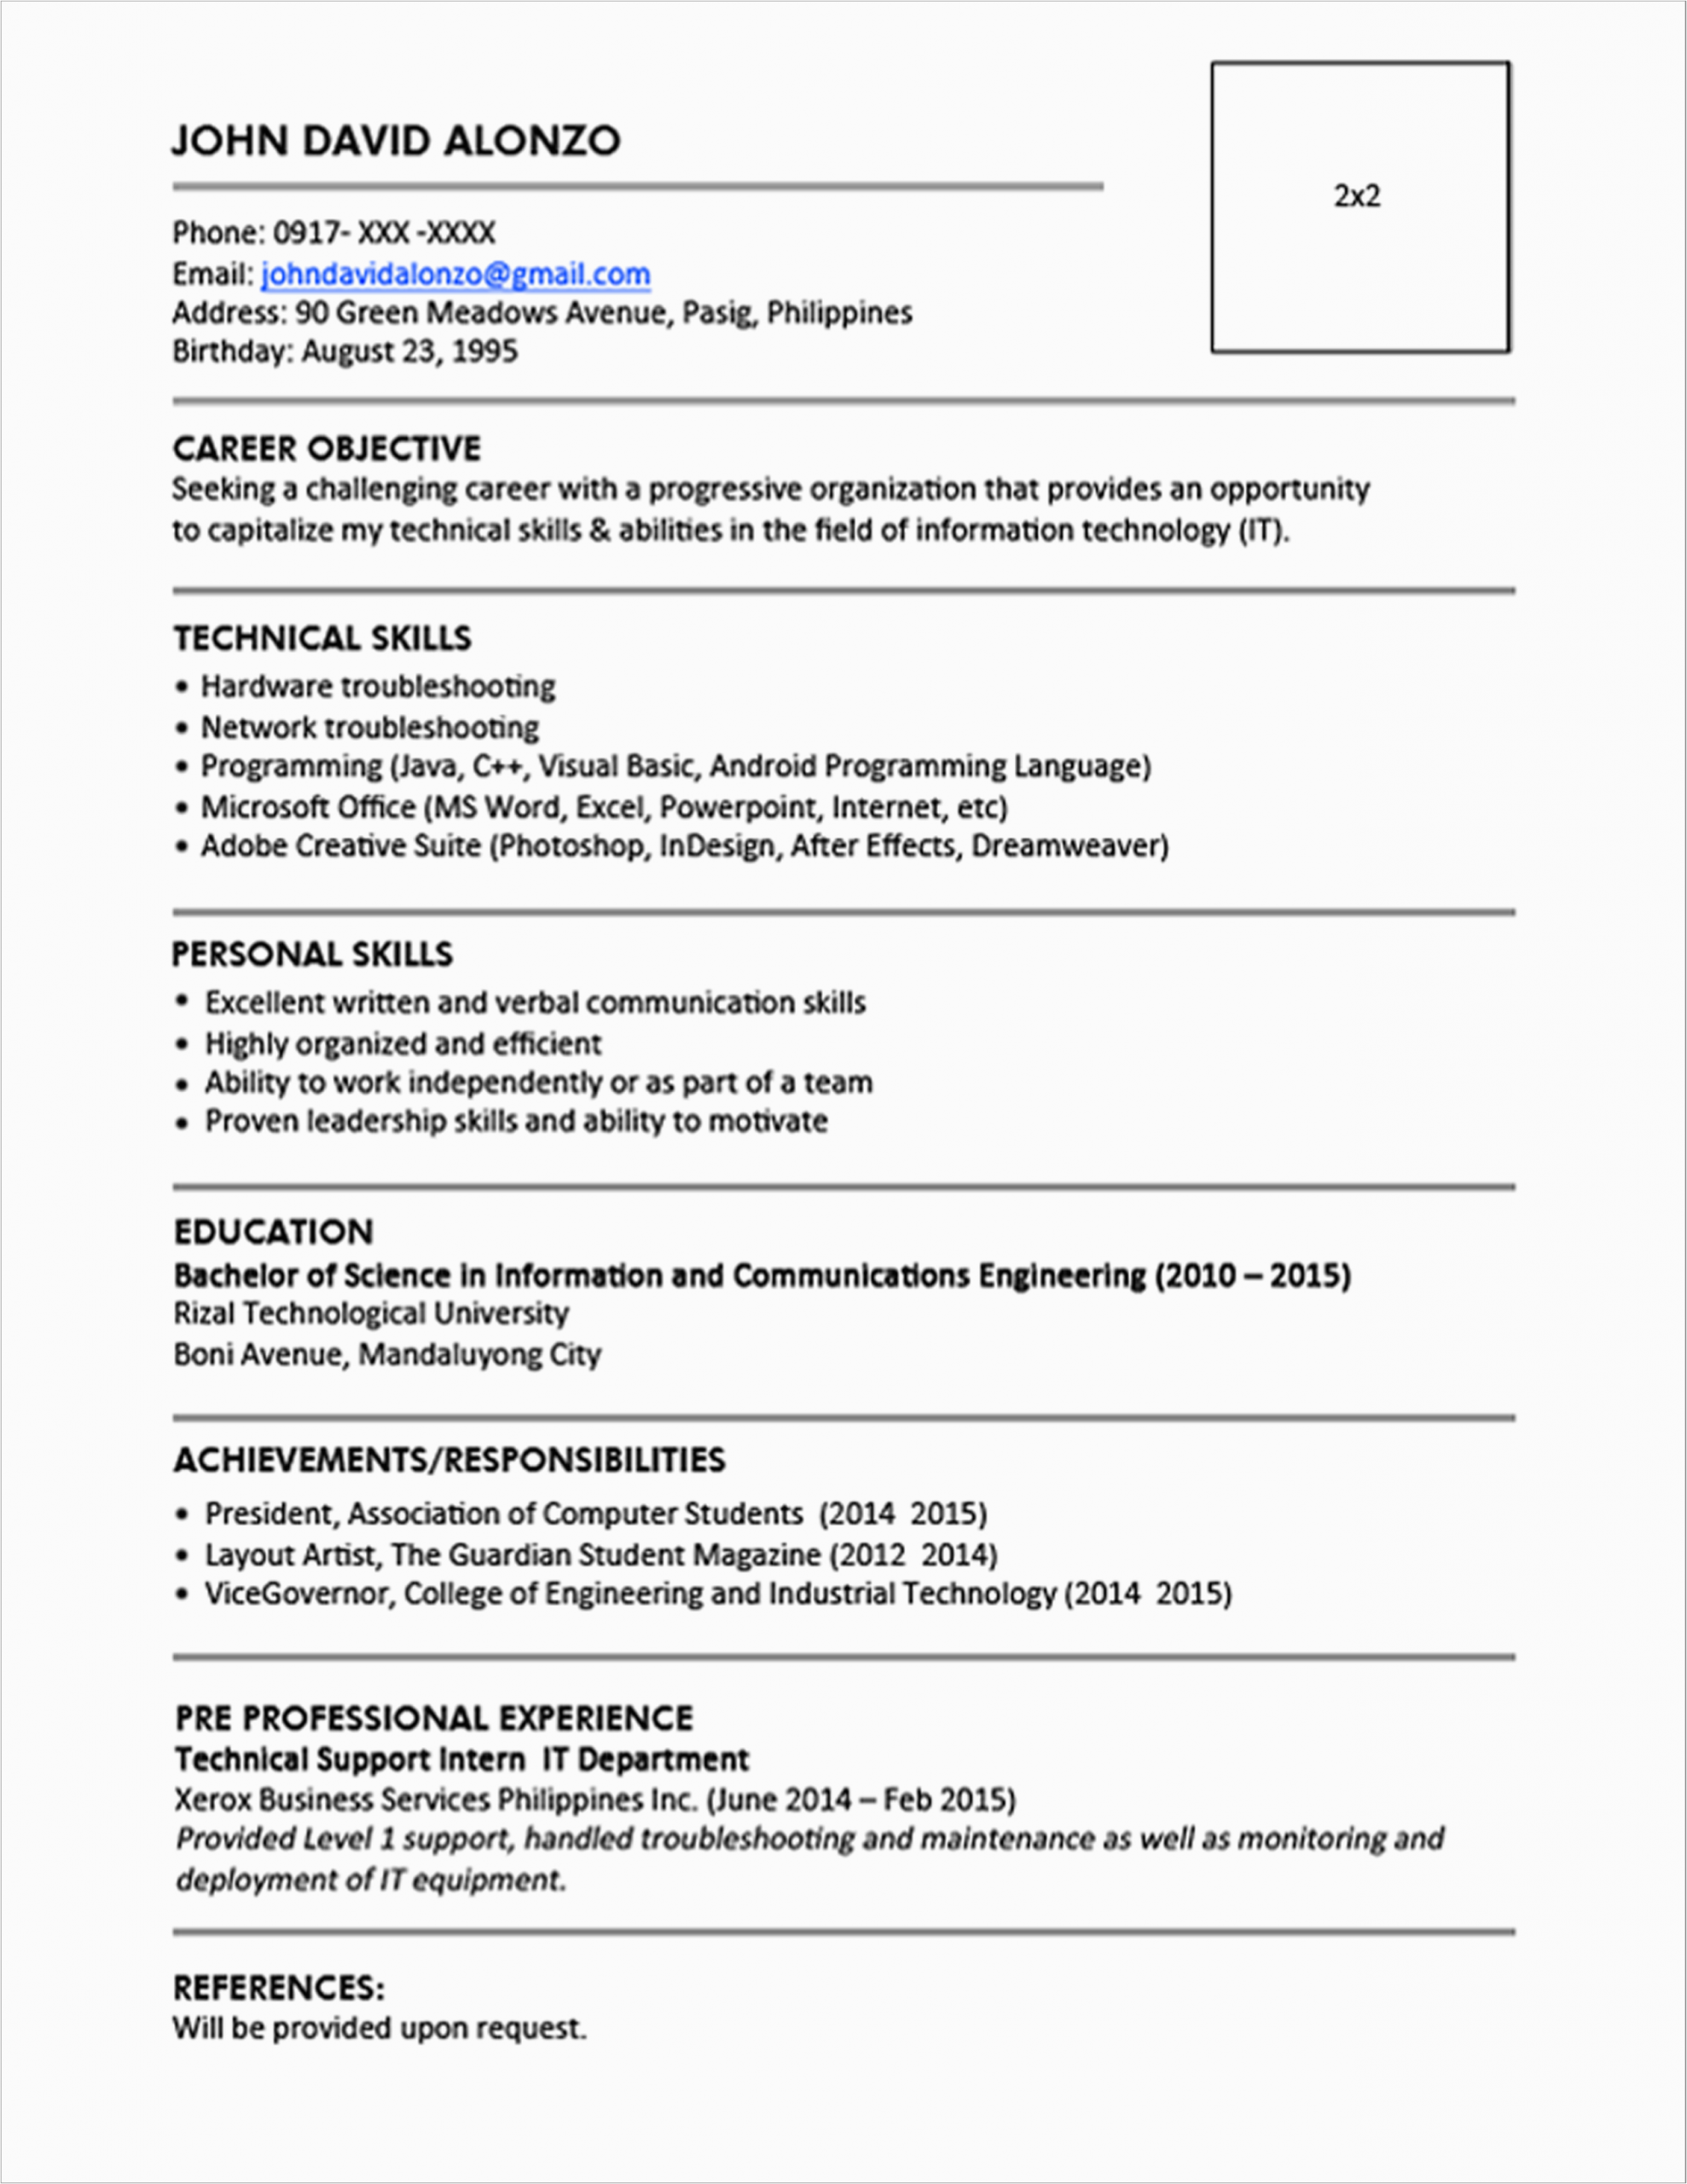 Sample Resume Title for Fresh Graduates Sample Resume format for Fresh Graduates E Page format